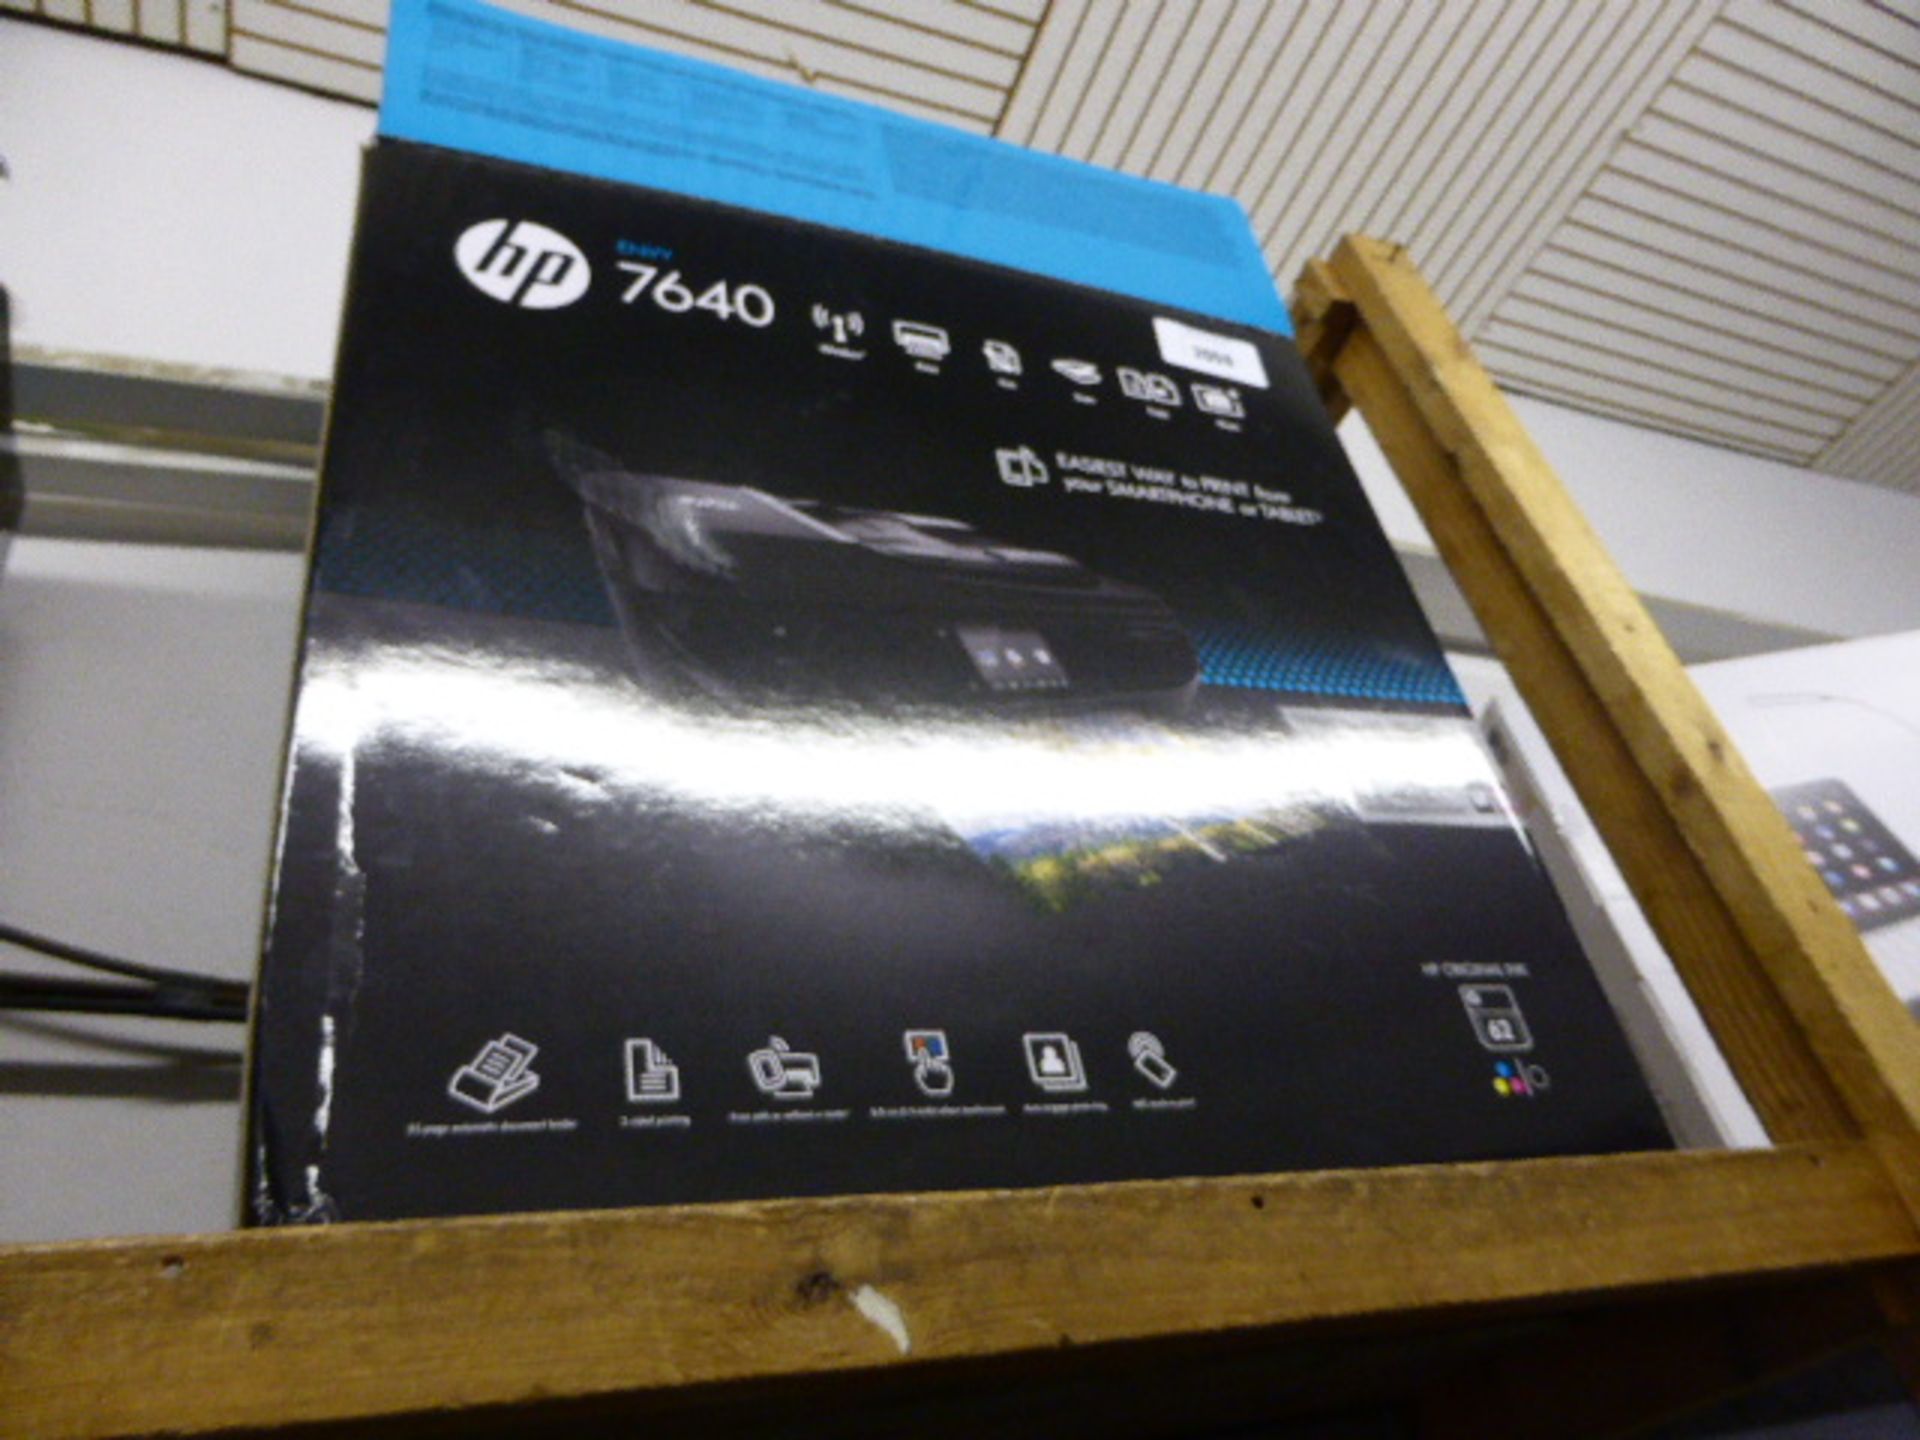 HP Envy 7640 wireless all in one printer in box